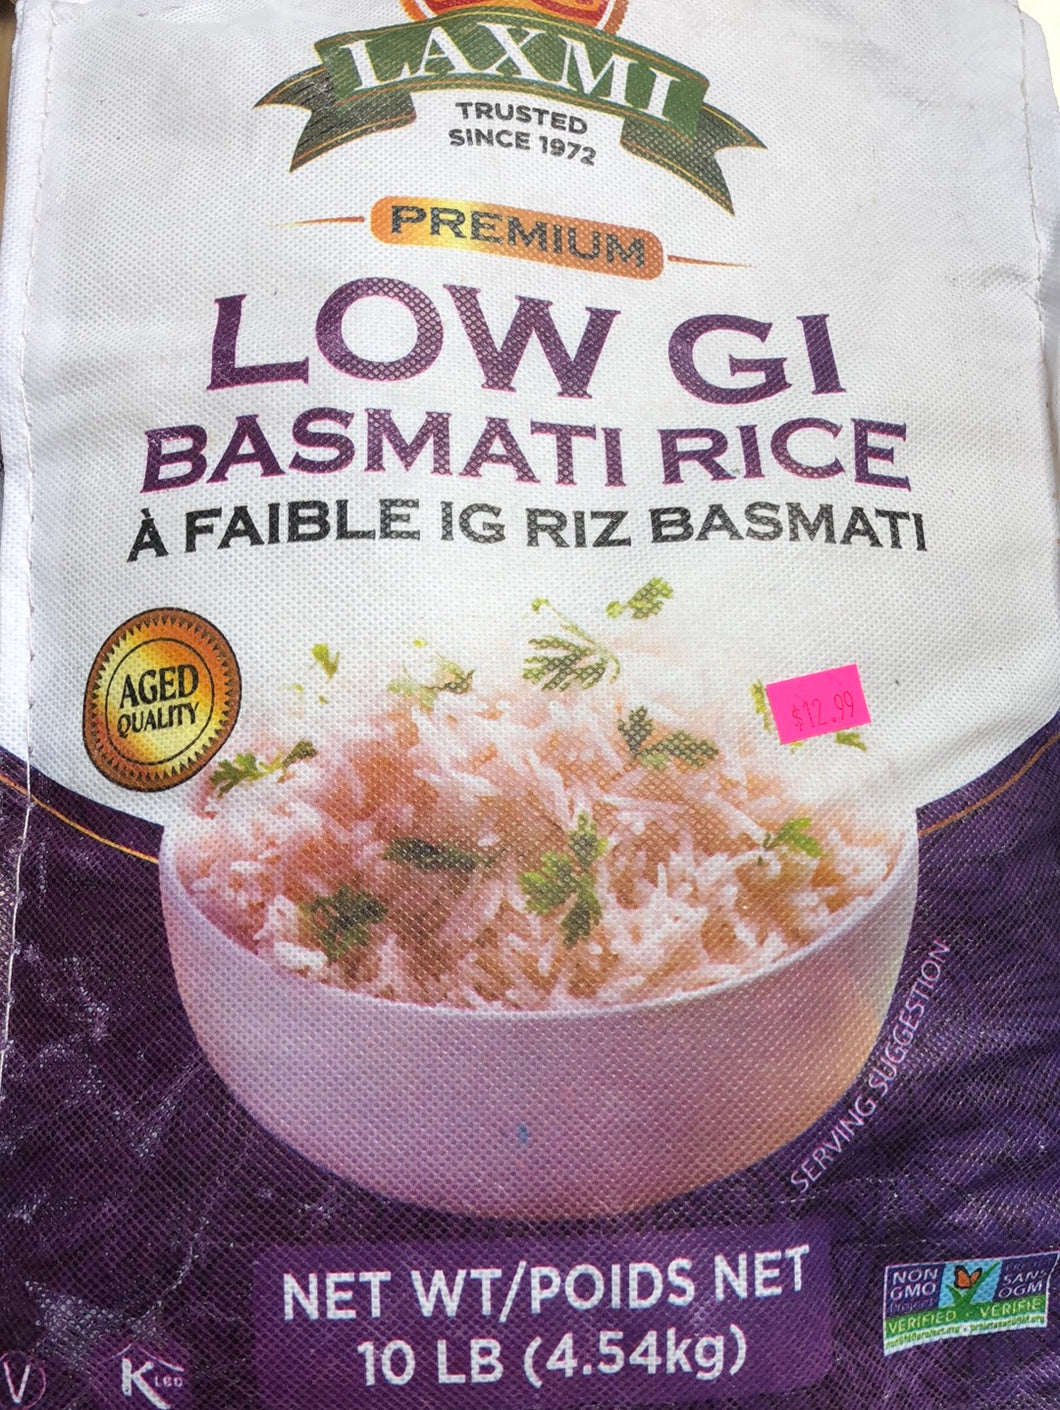 LAXMI Low Gi Basmati Rice 10 Lb